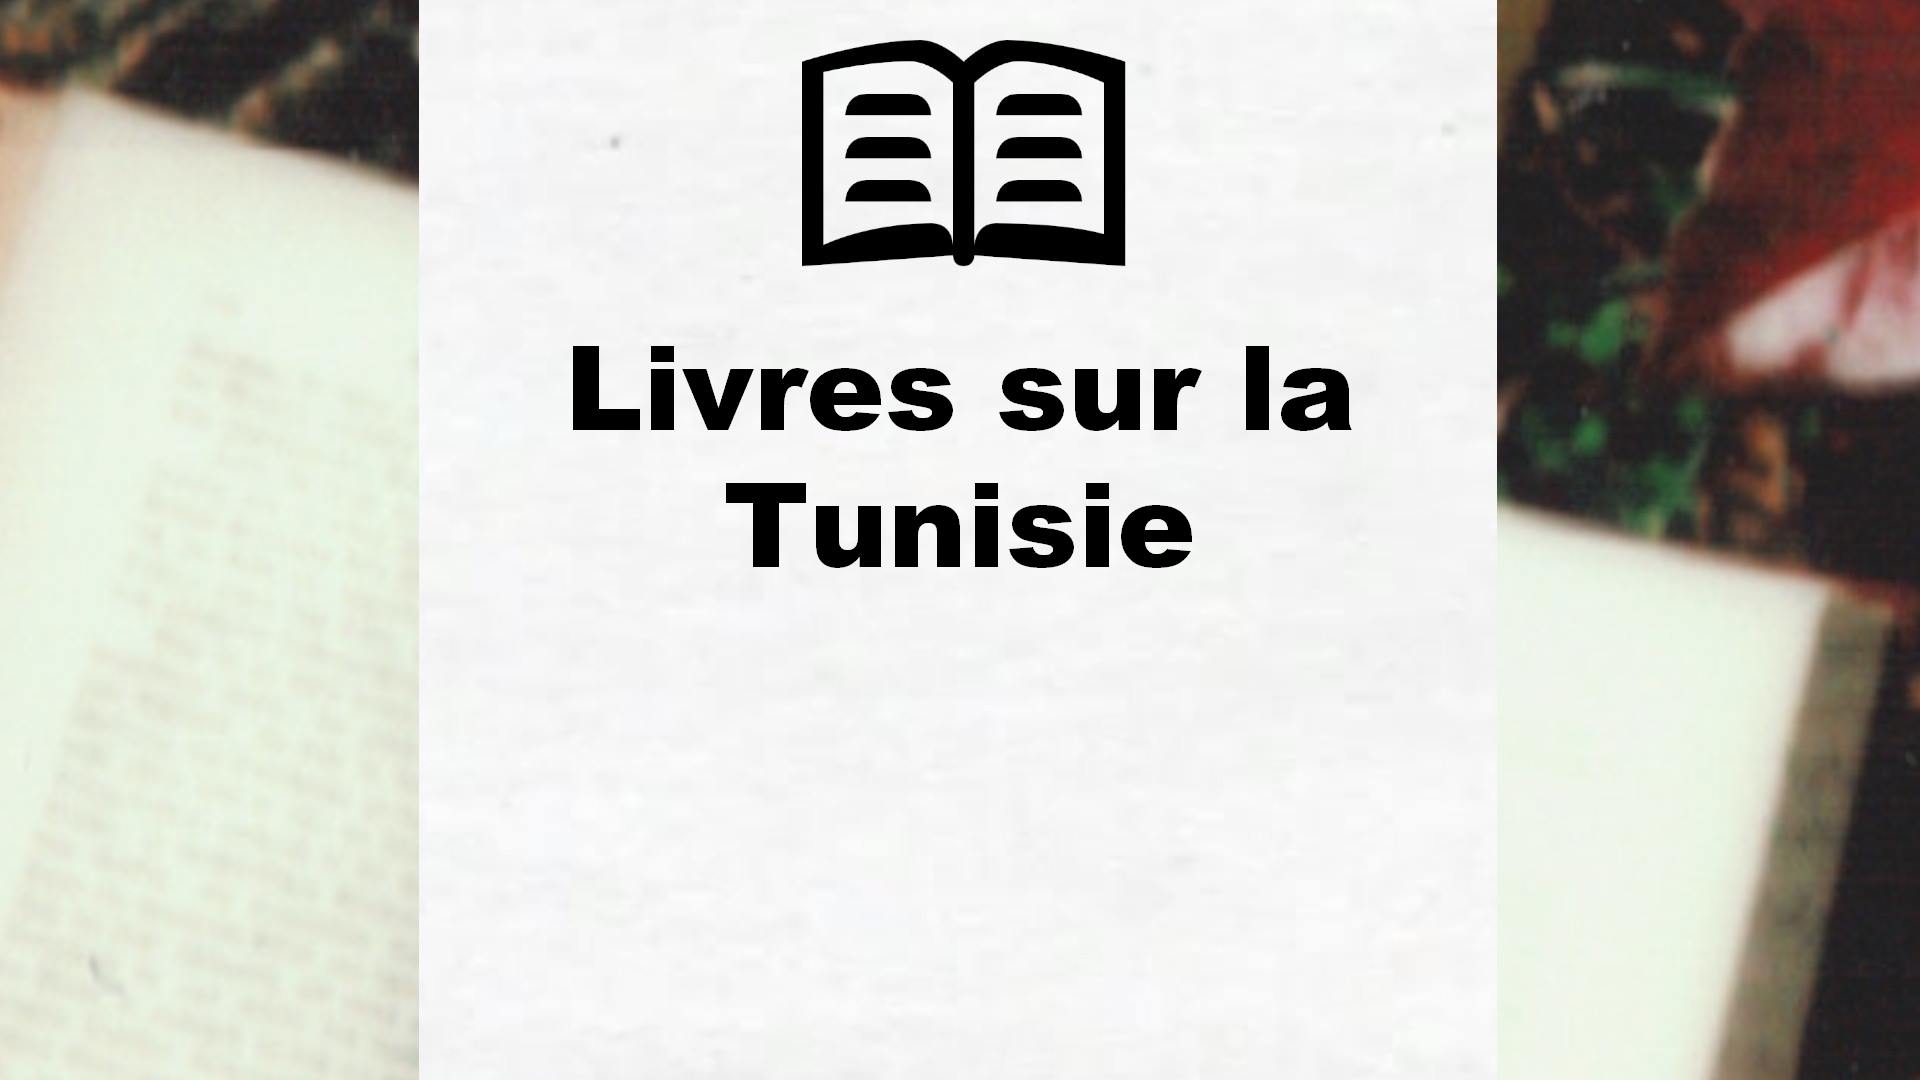 Livres sur la Tunisie